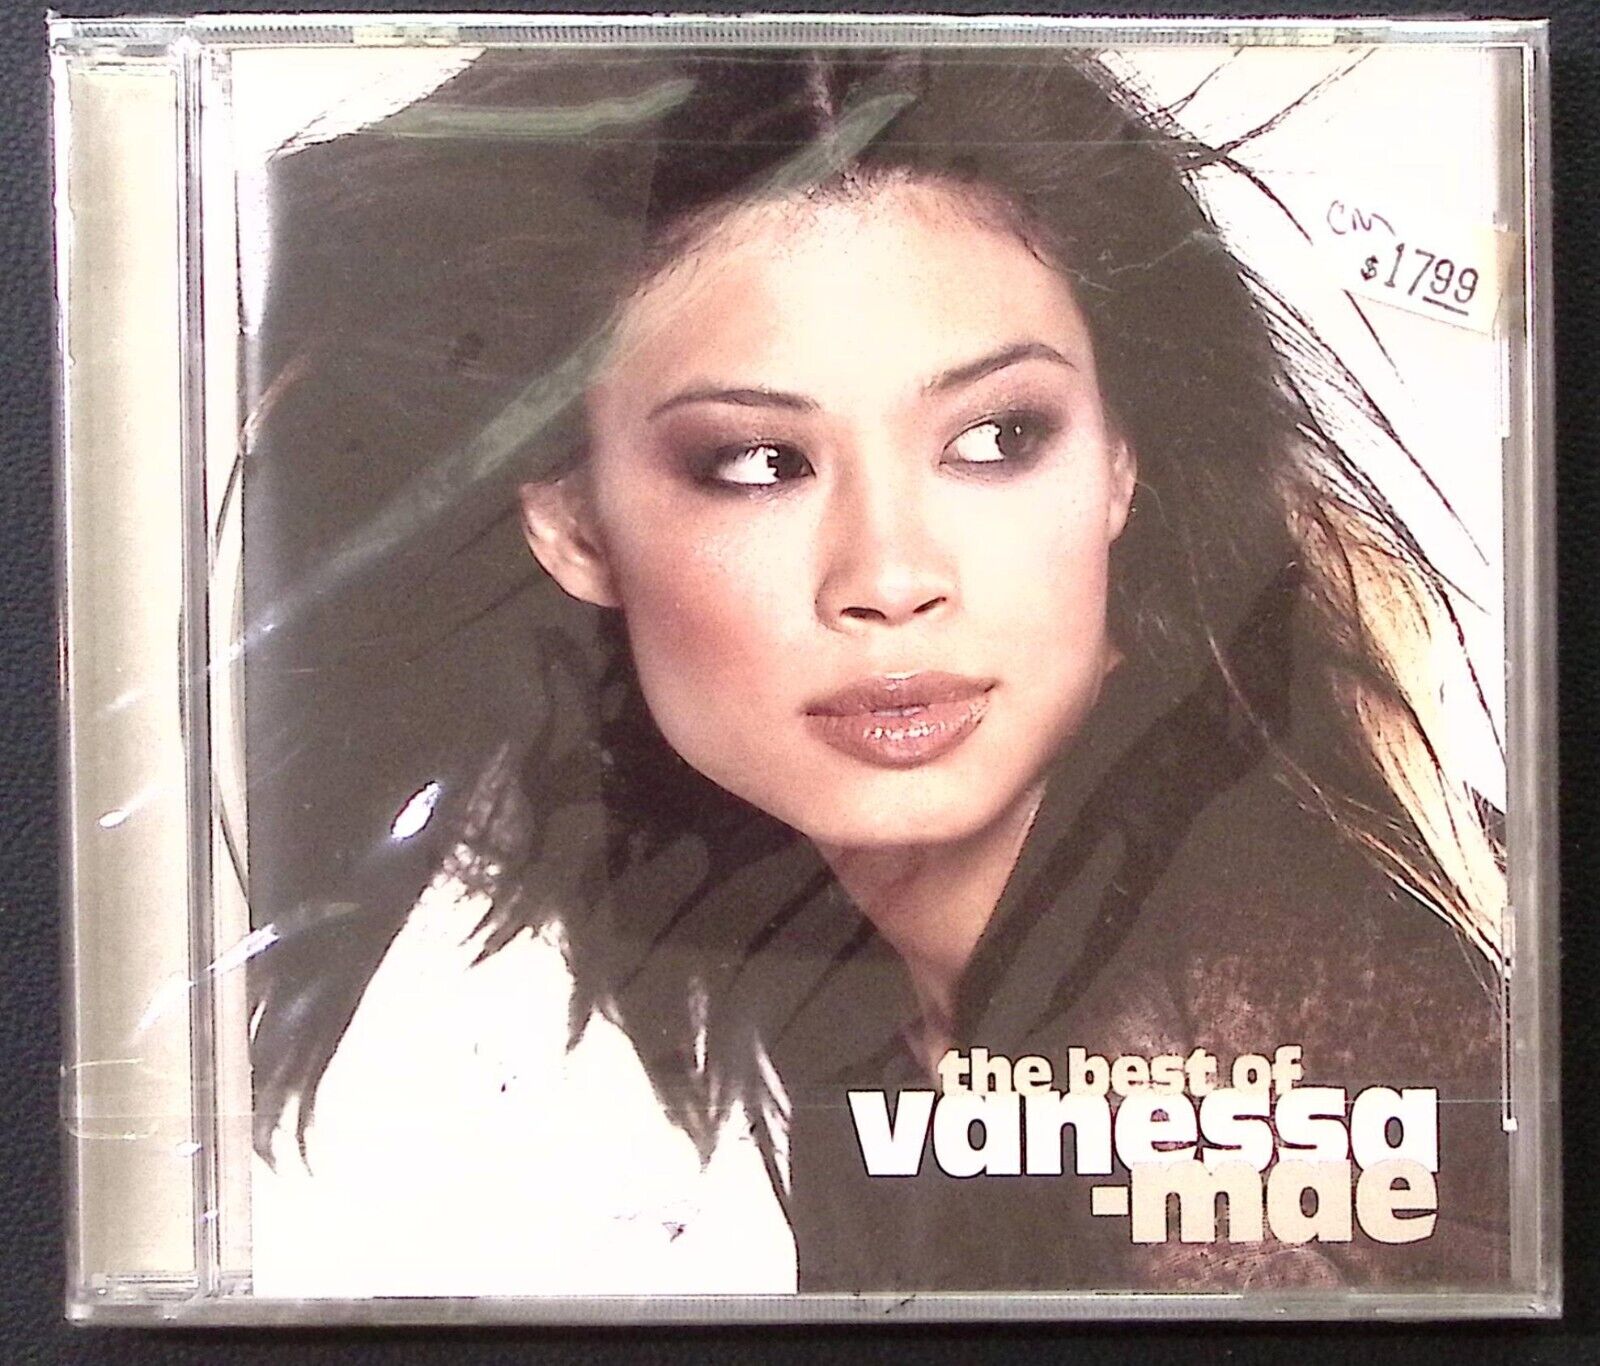 VANESSA-MAE  THE BEST OF VANESSA-MAE  EMI  STILL SEALED  CD 334